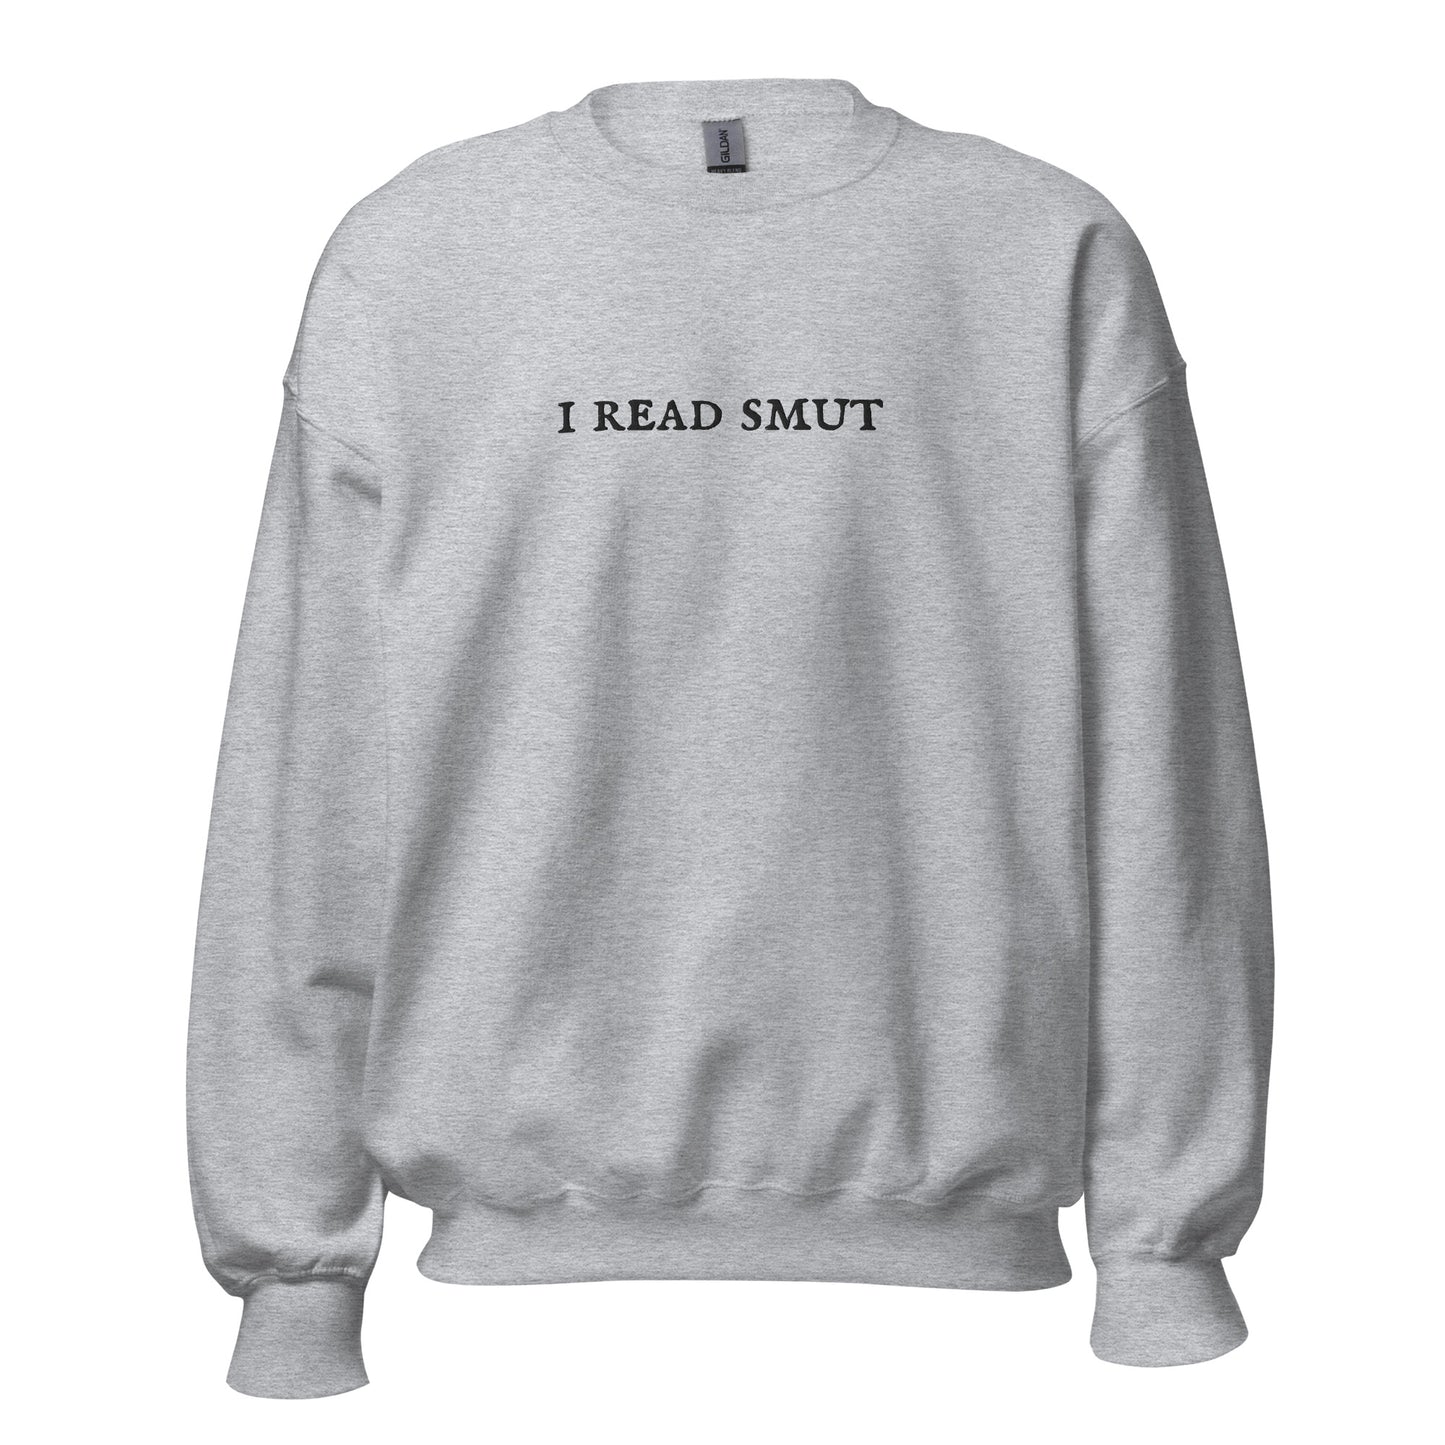 i read smut embroidered sweatshirt